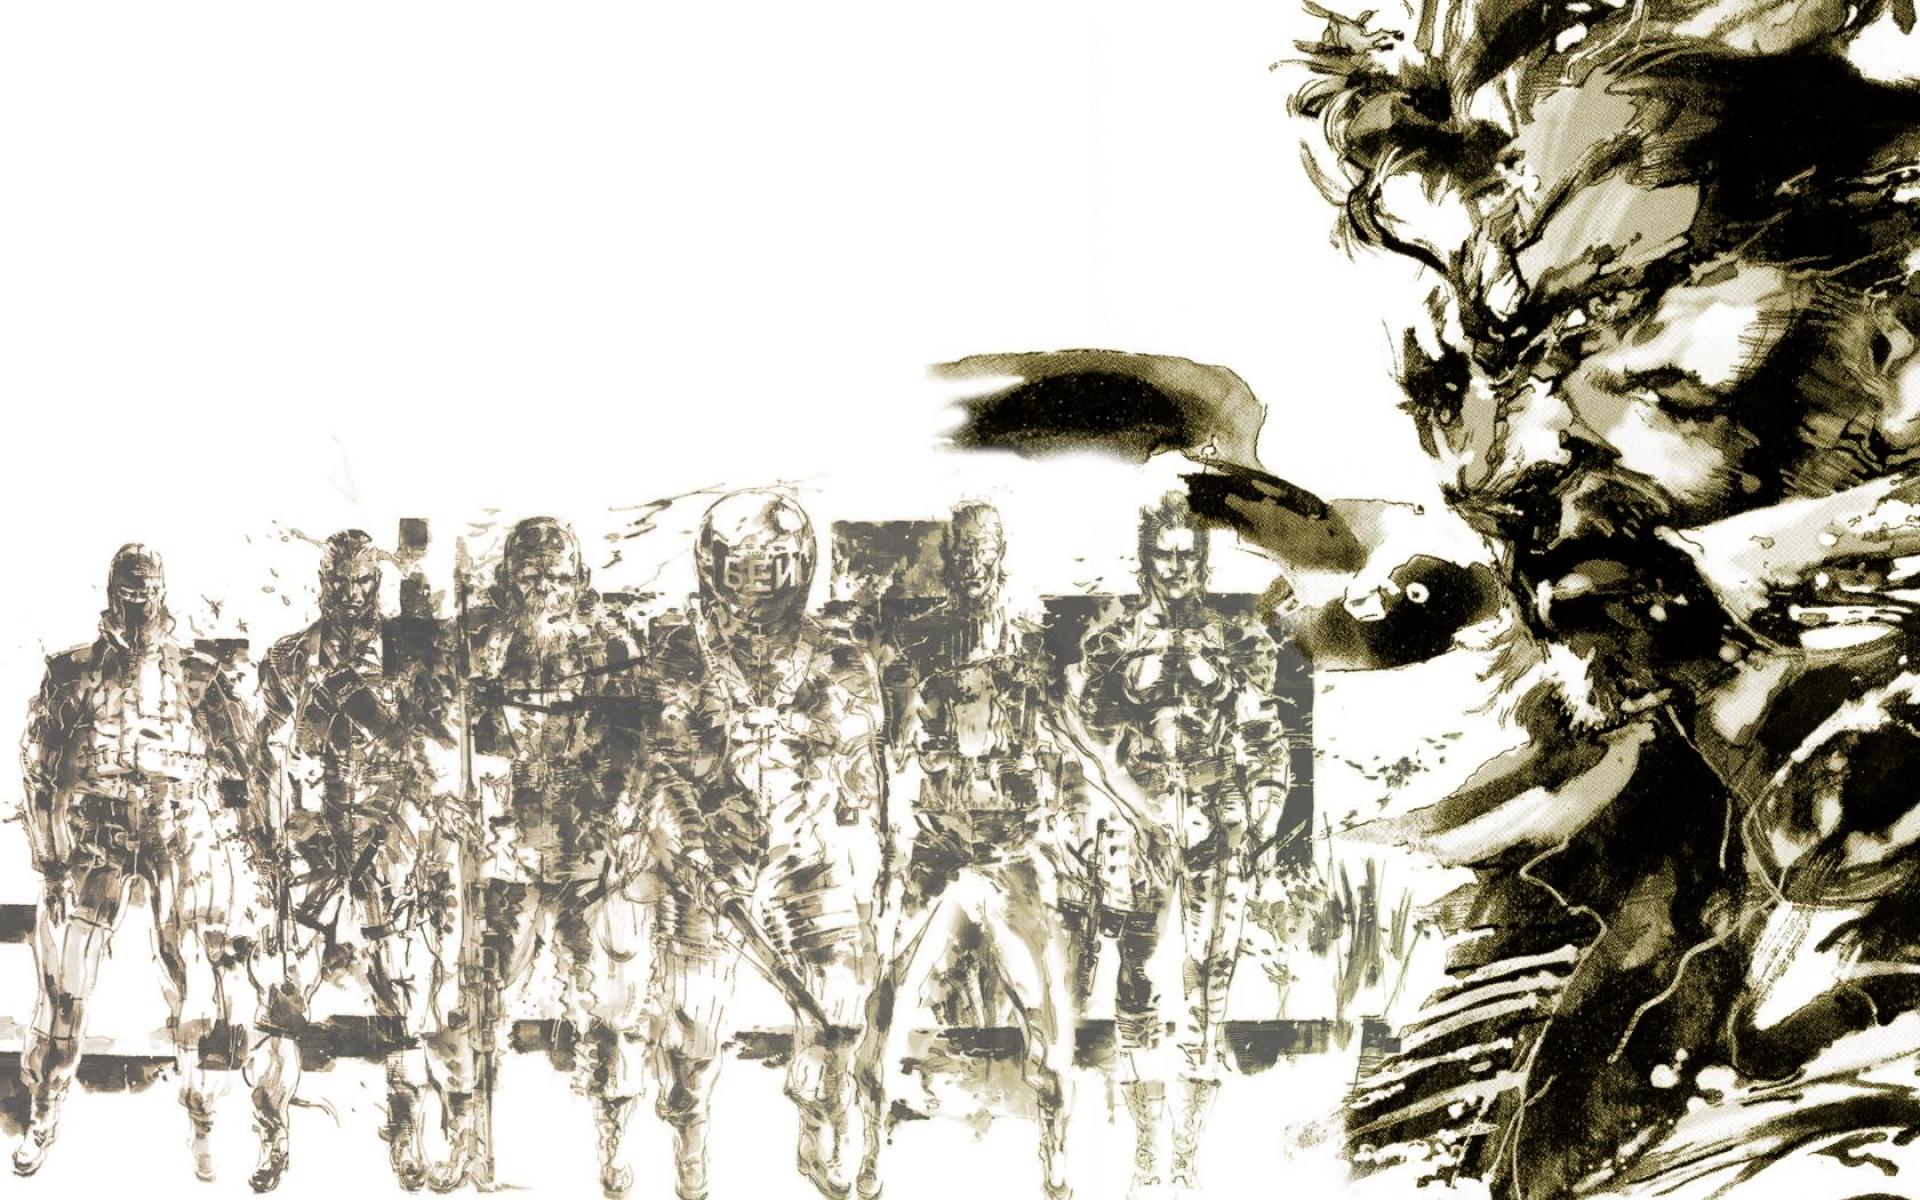 Metal Gear Solid Wallpaper HD